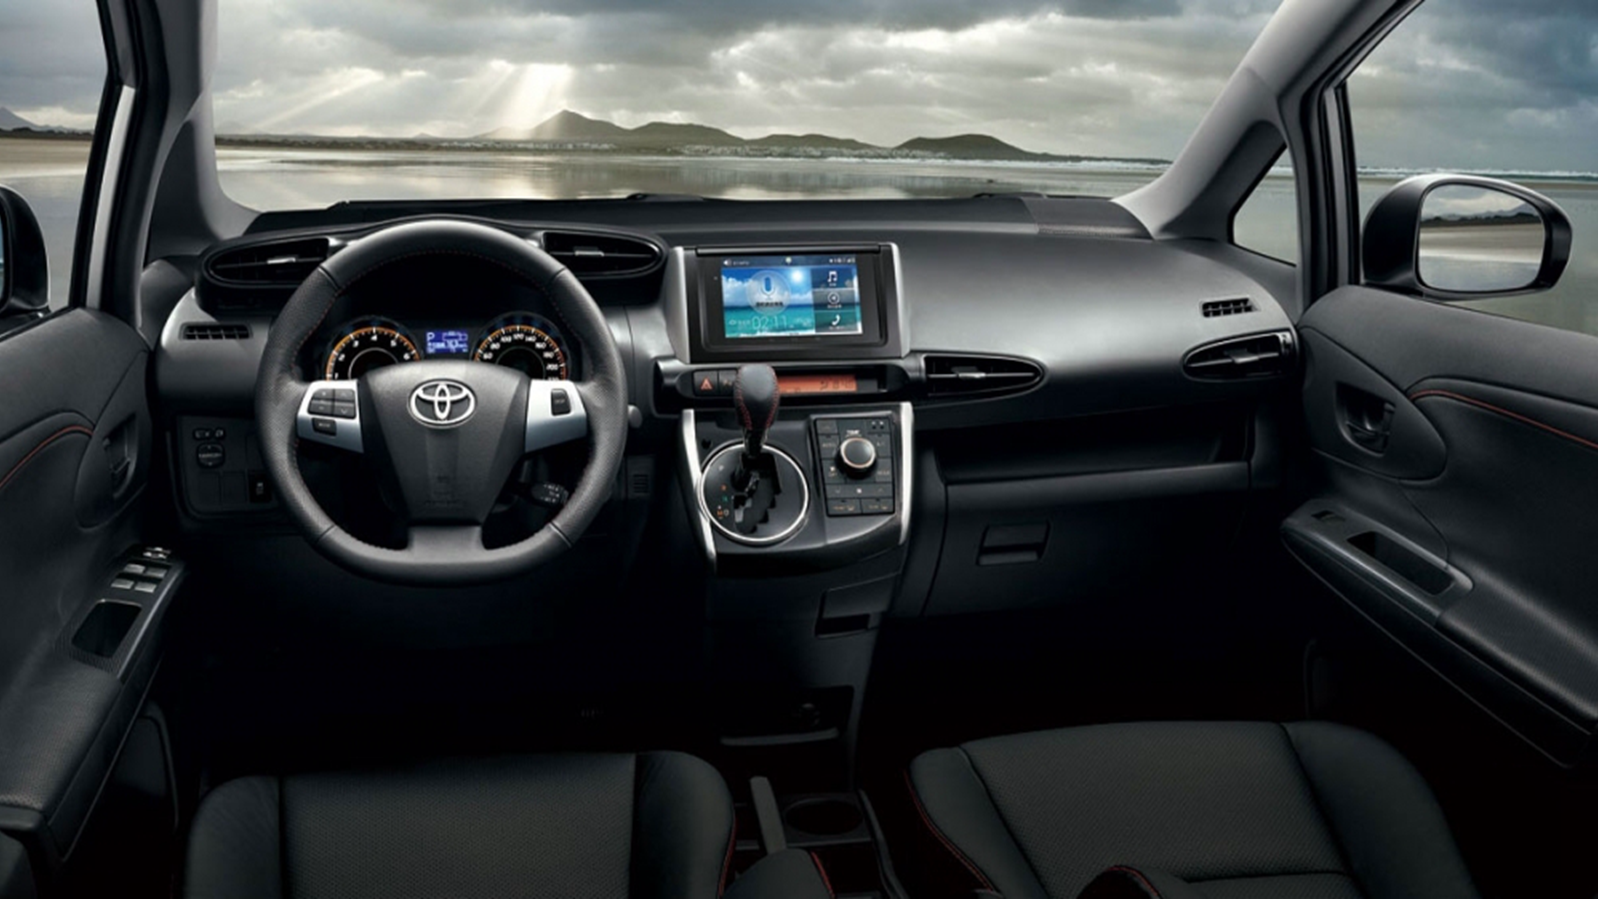 Toyota Wish interior - Cockpit